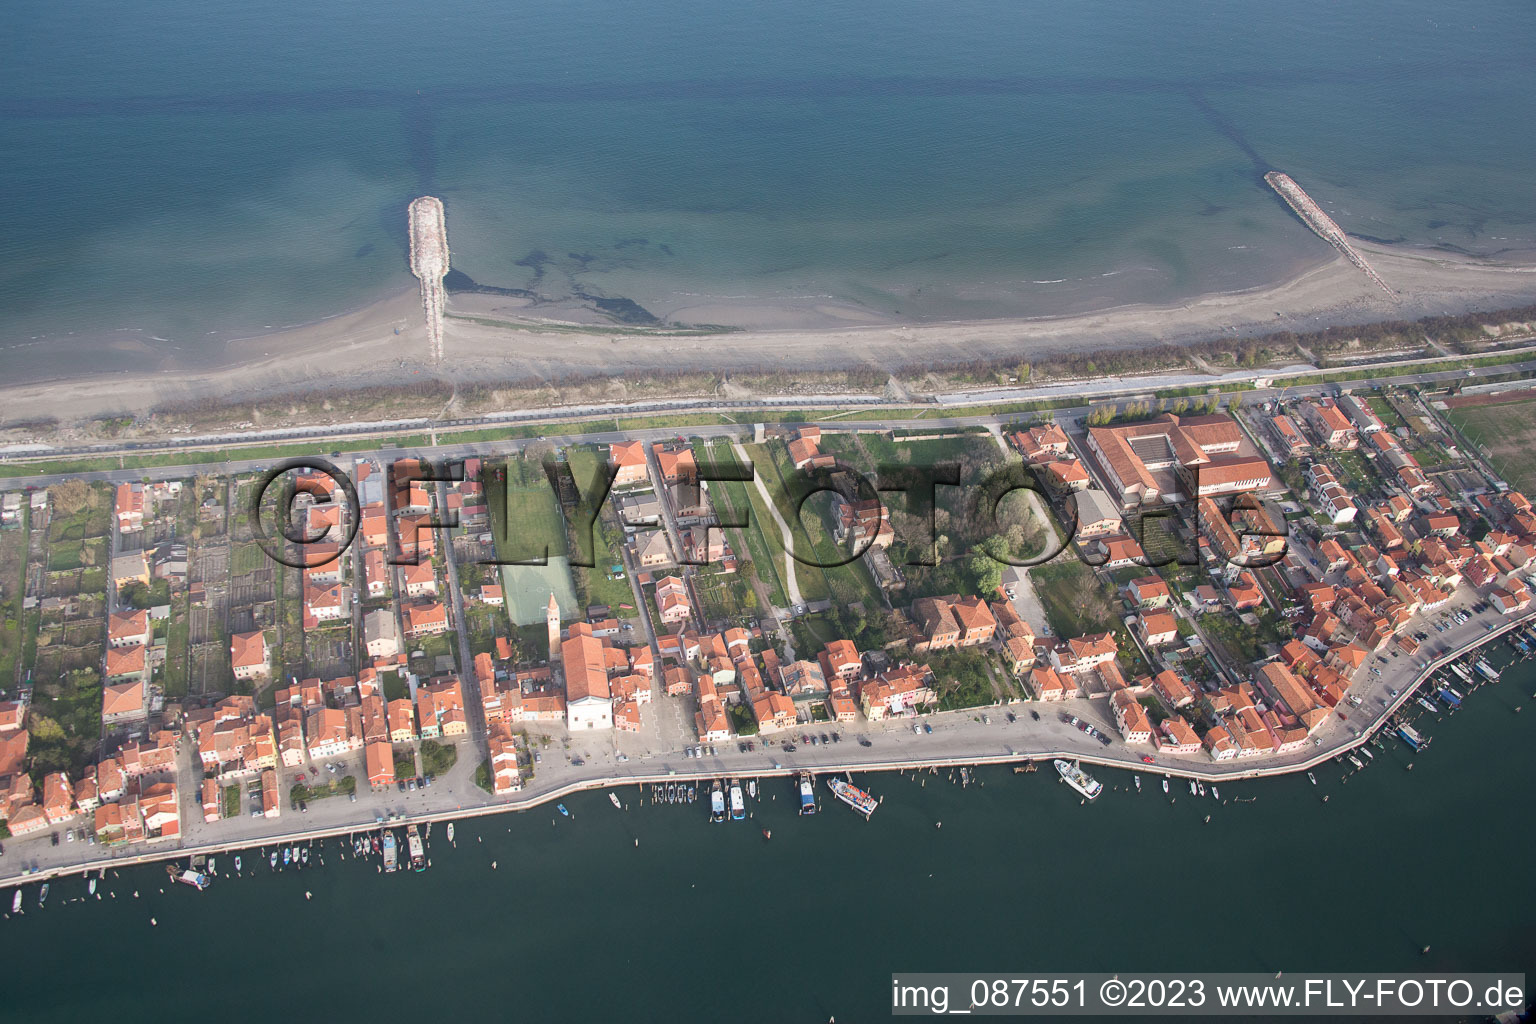 Sant'Antonio im Bundesland Venetien, Italien aus der Luft betrachtet